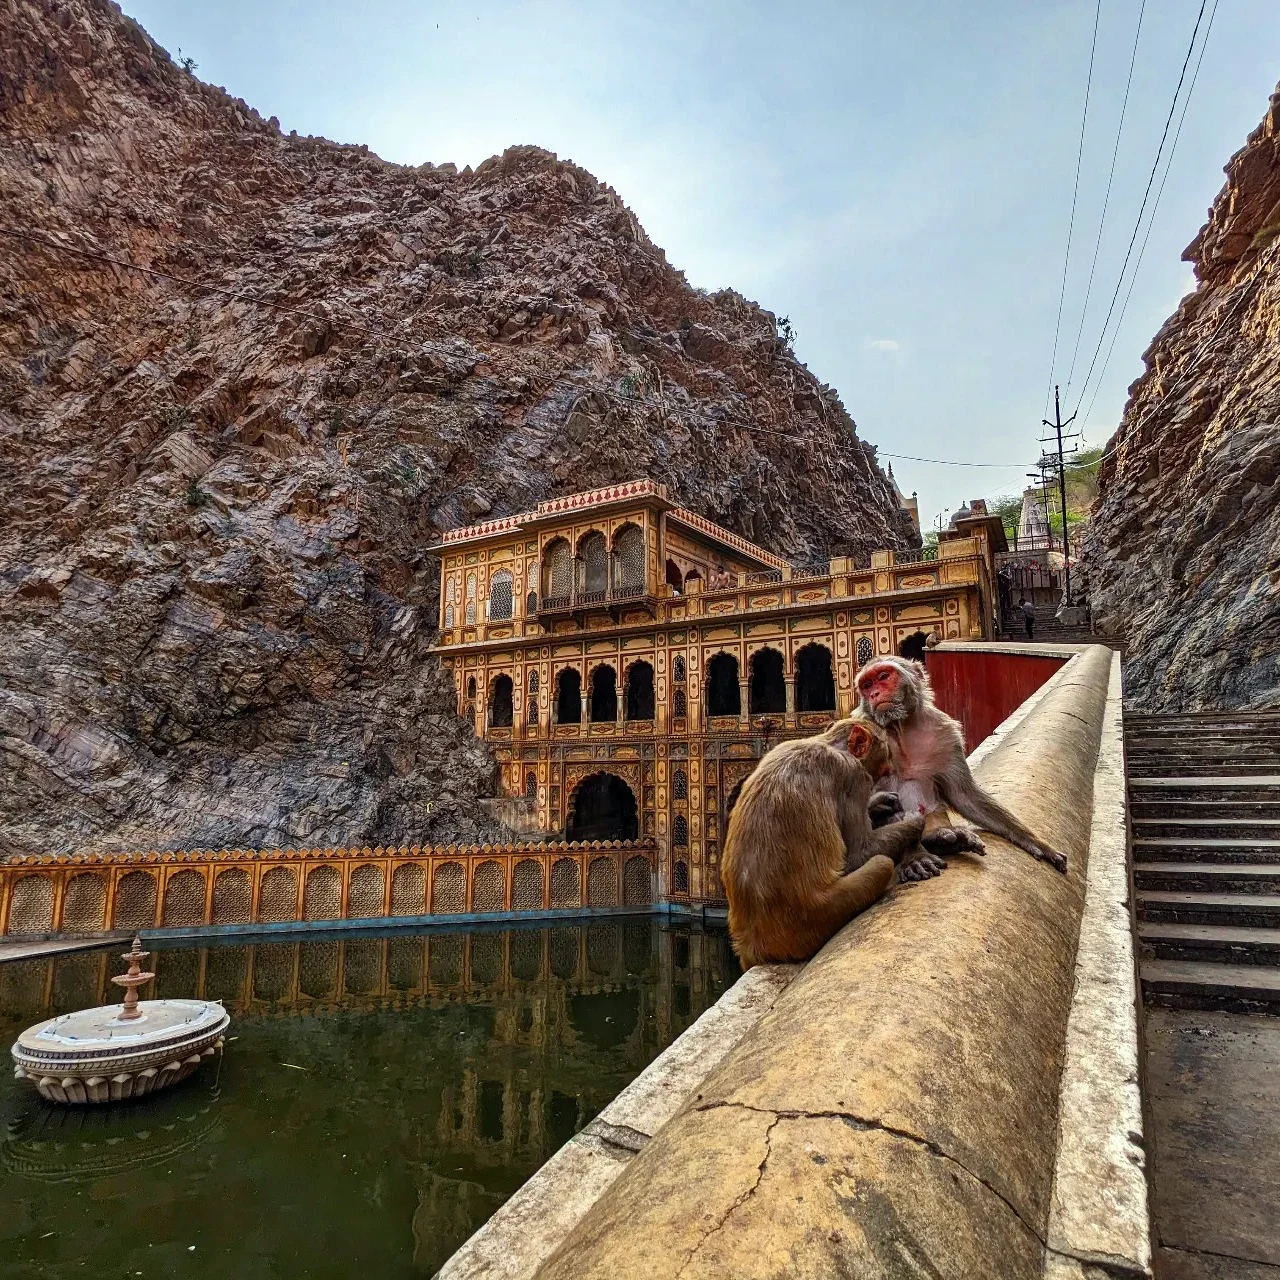 Monkey Temple near Jaipur India